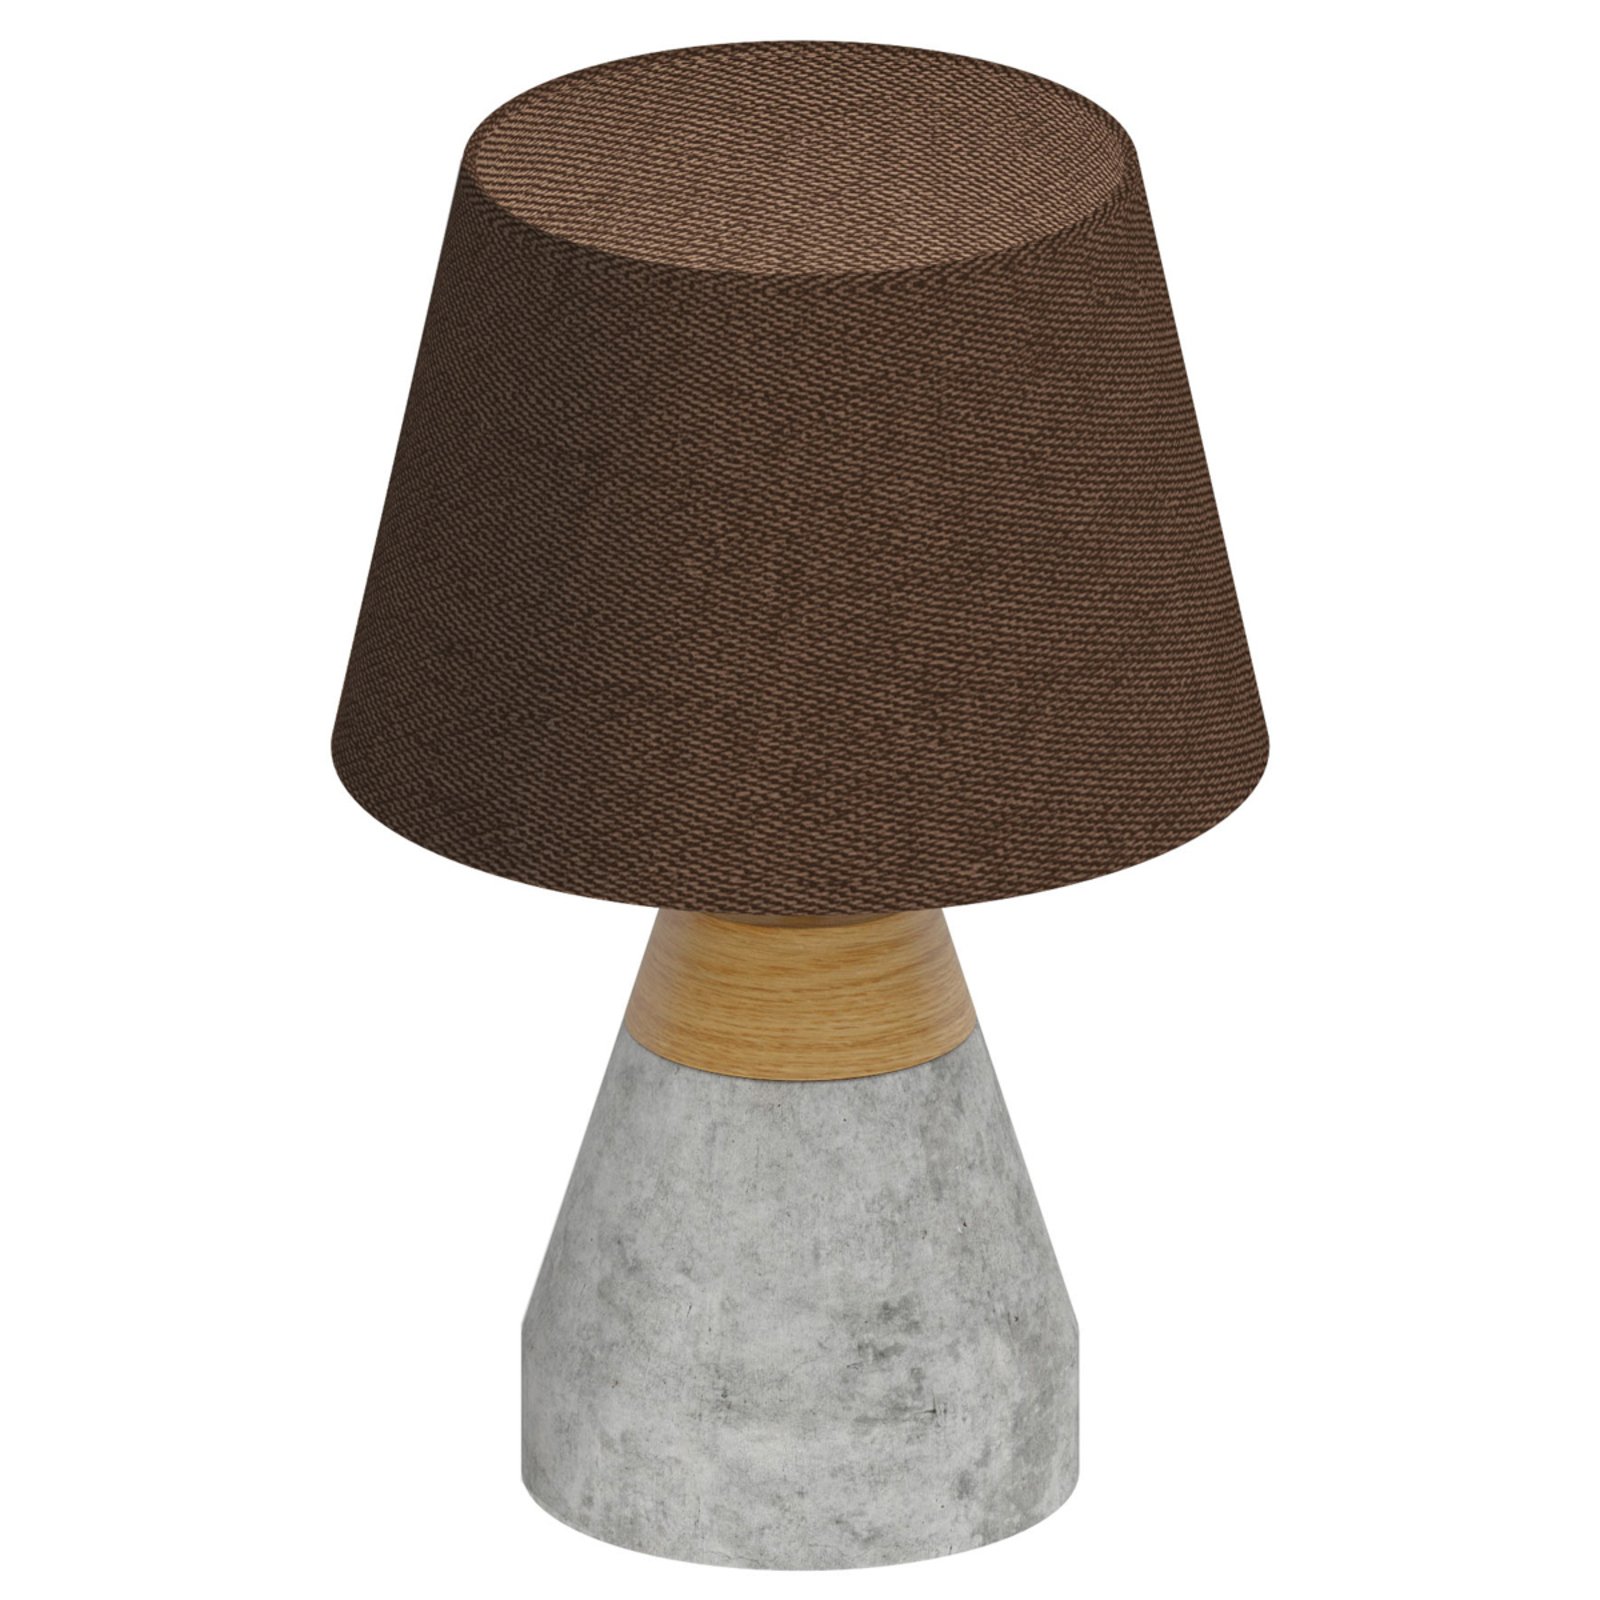 Stylish Tarega fabric table lamp, concrete base